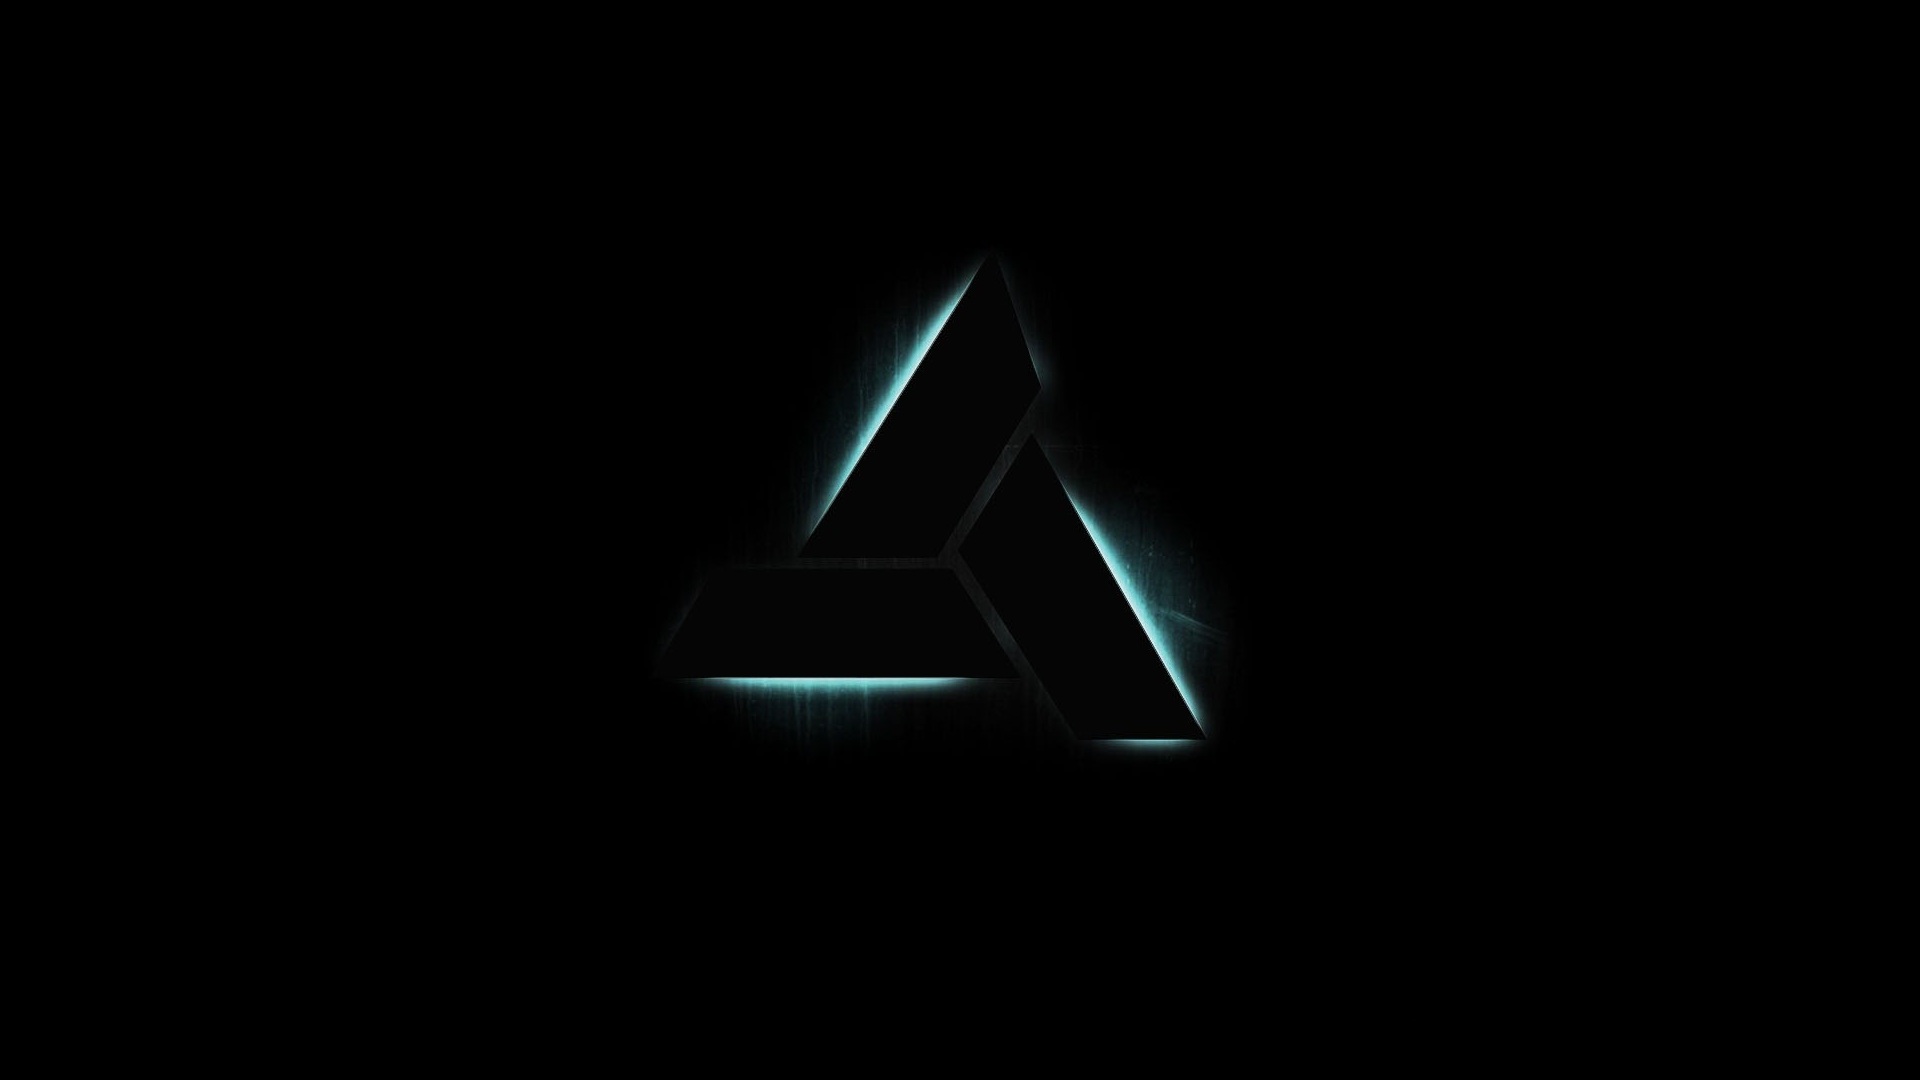 Descarga gratuita de fondo de pantalla para móvil de Assassin's Creed: Unidad, Assassin's Creed, Logo, Videojuego.